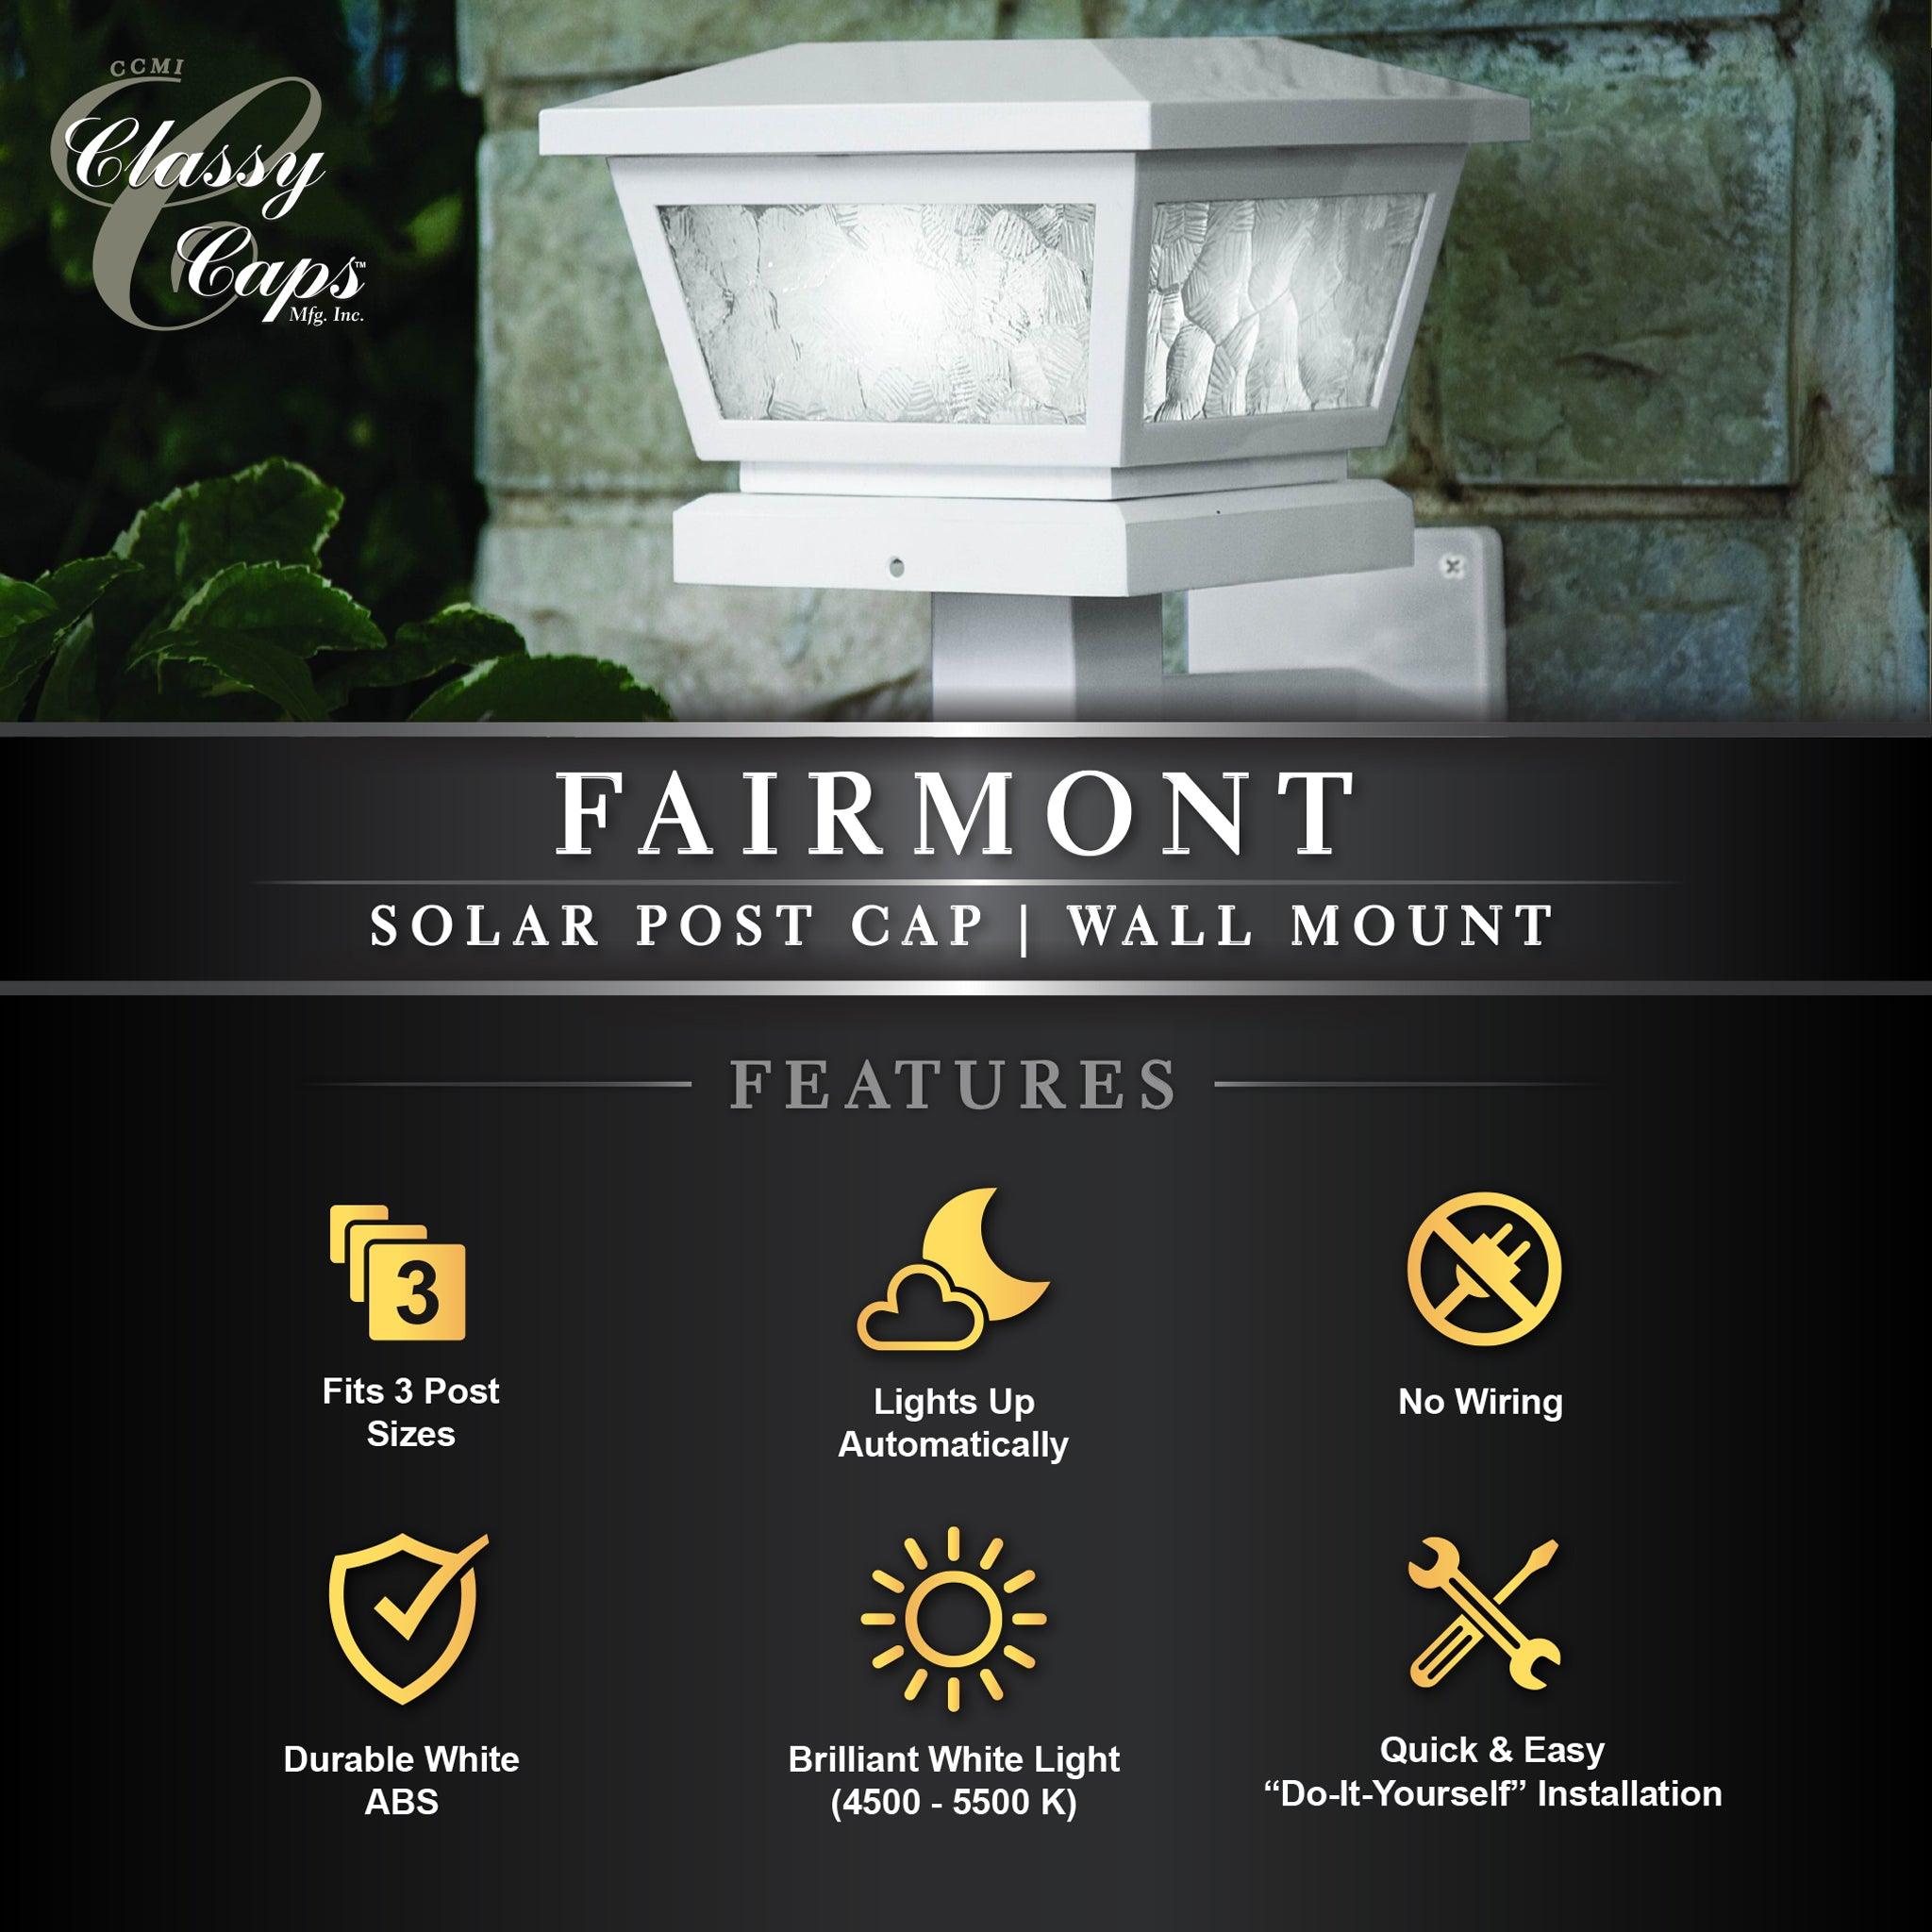 Fairmont Solar Post Cap / Wall Mount - White - Classy Caps Mfg. Inc.